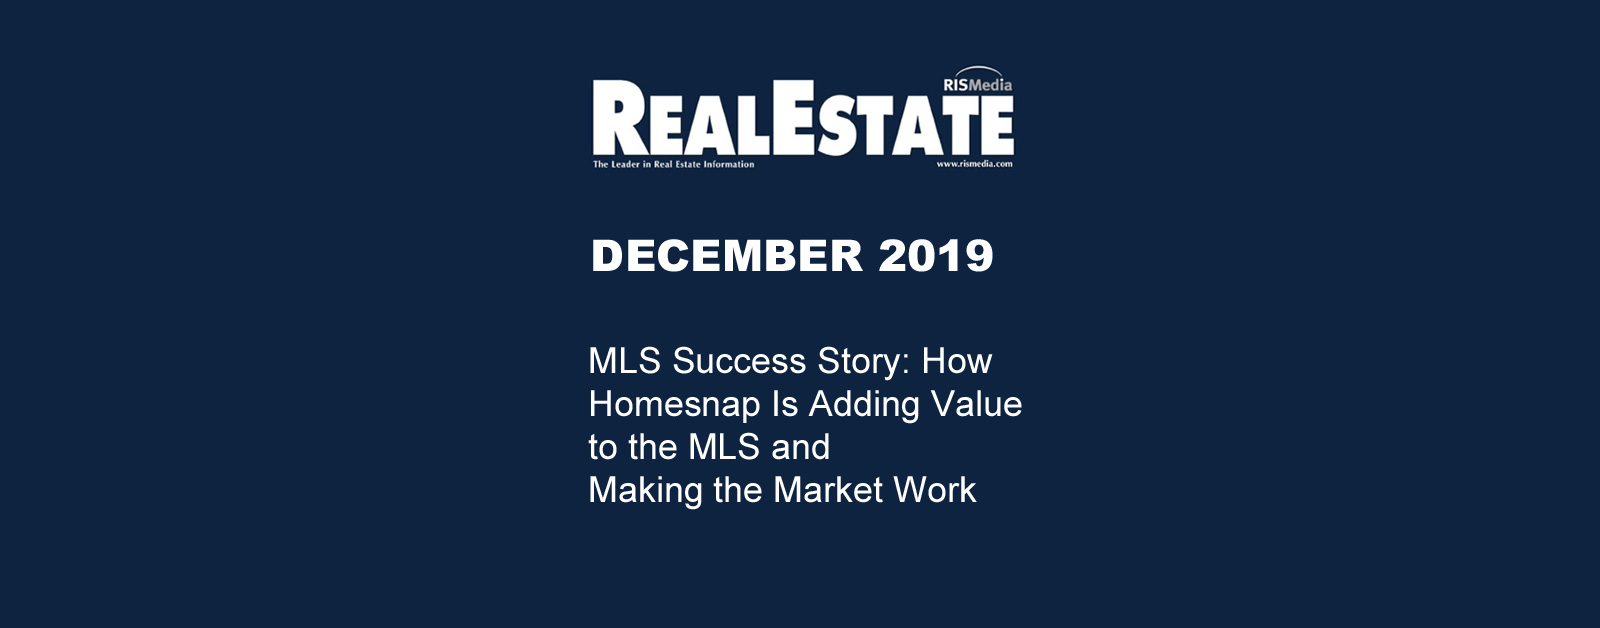 Real Estate Magazine December